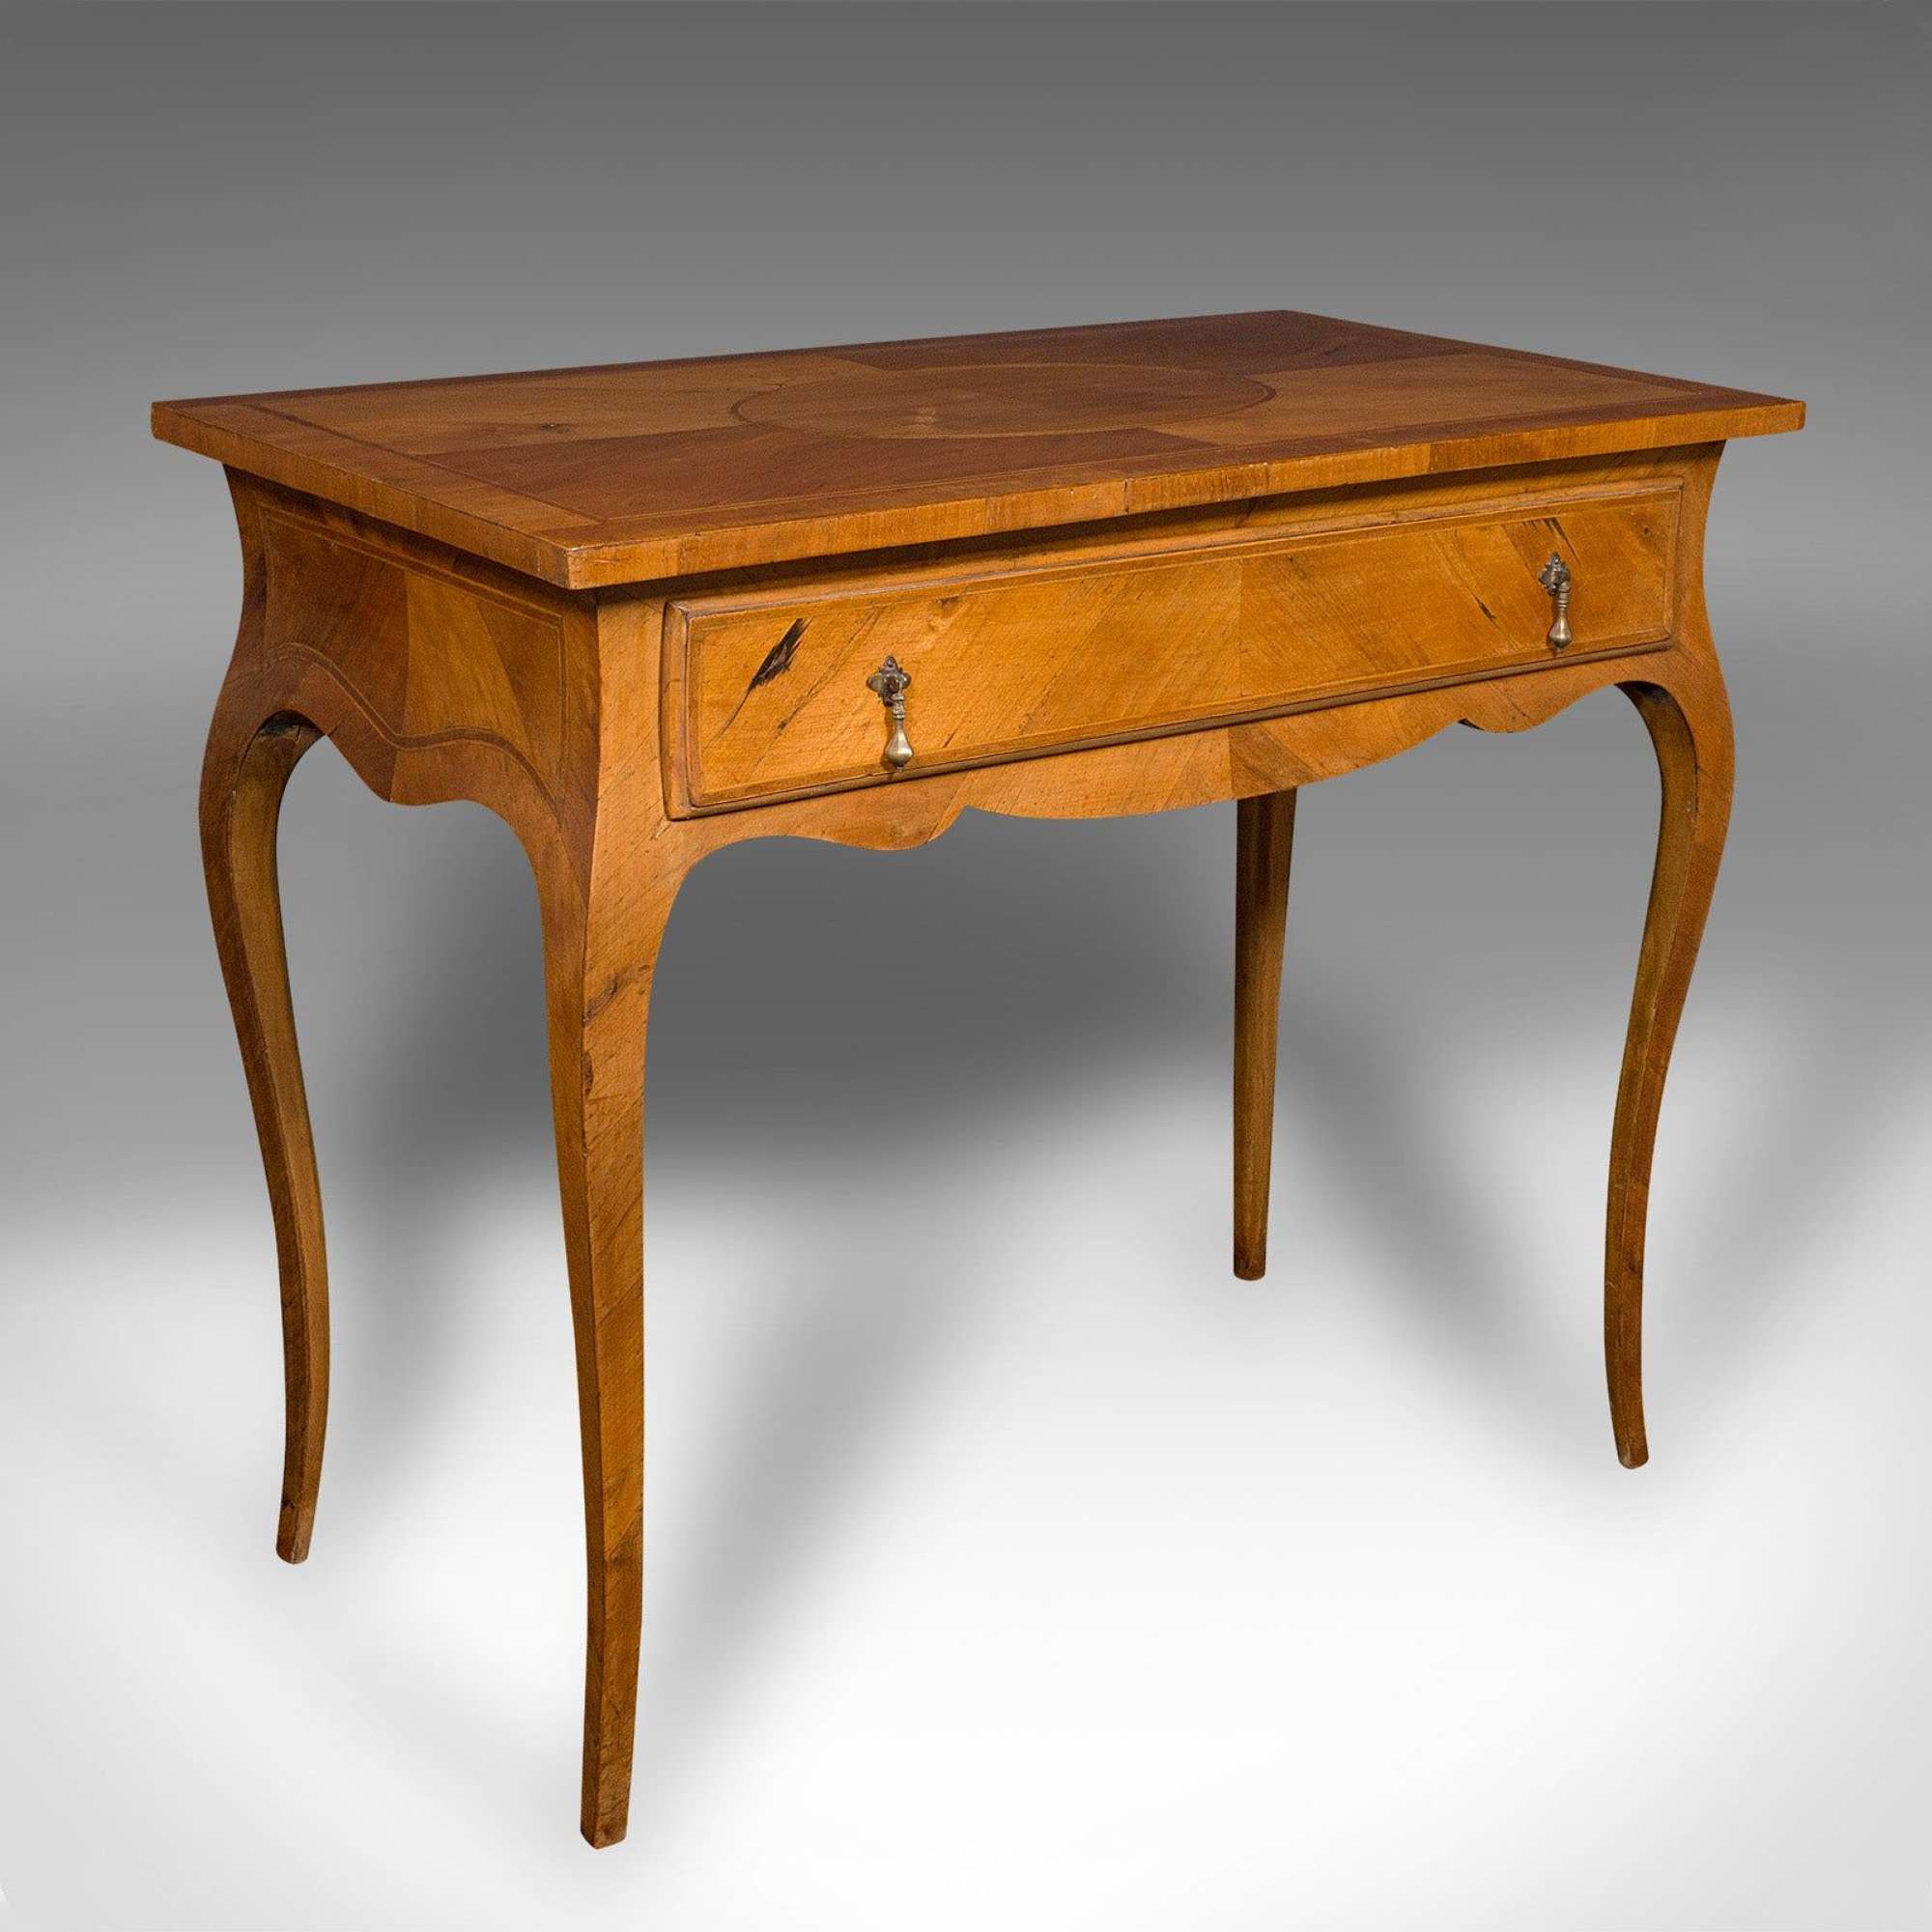 Antique Bureau Plat, French, Walnut, Writing Desk, Louis Xv Revival, Victorian